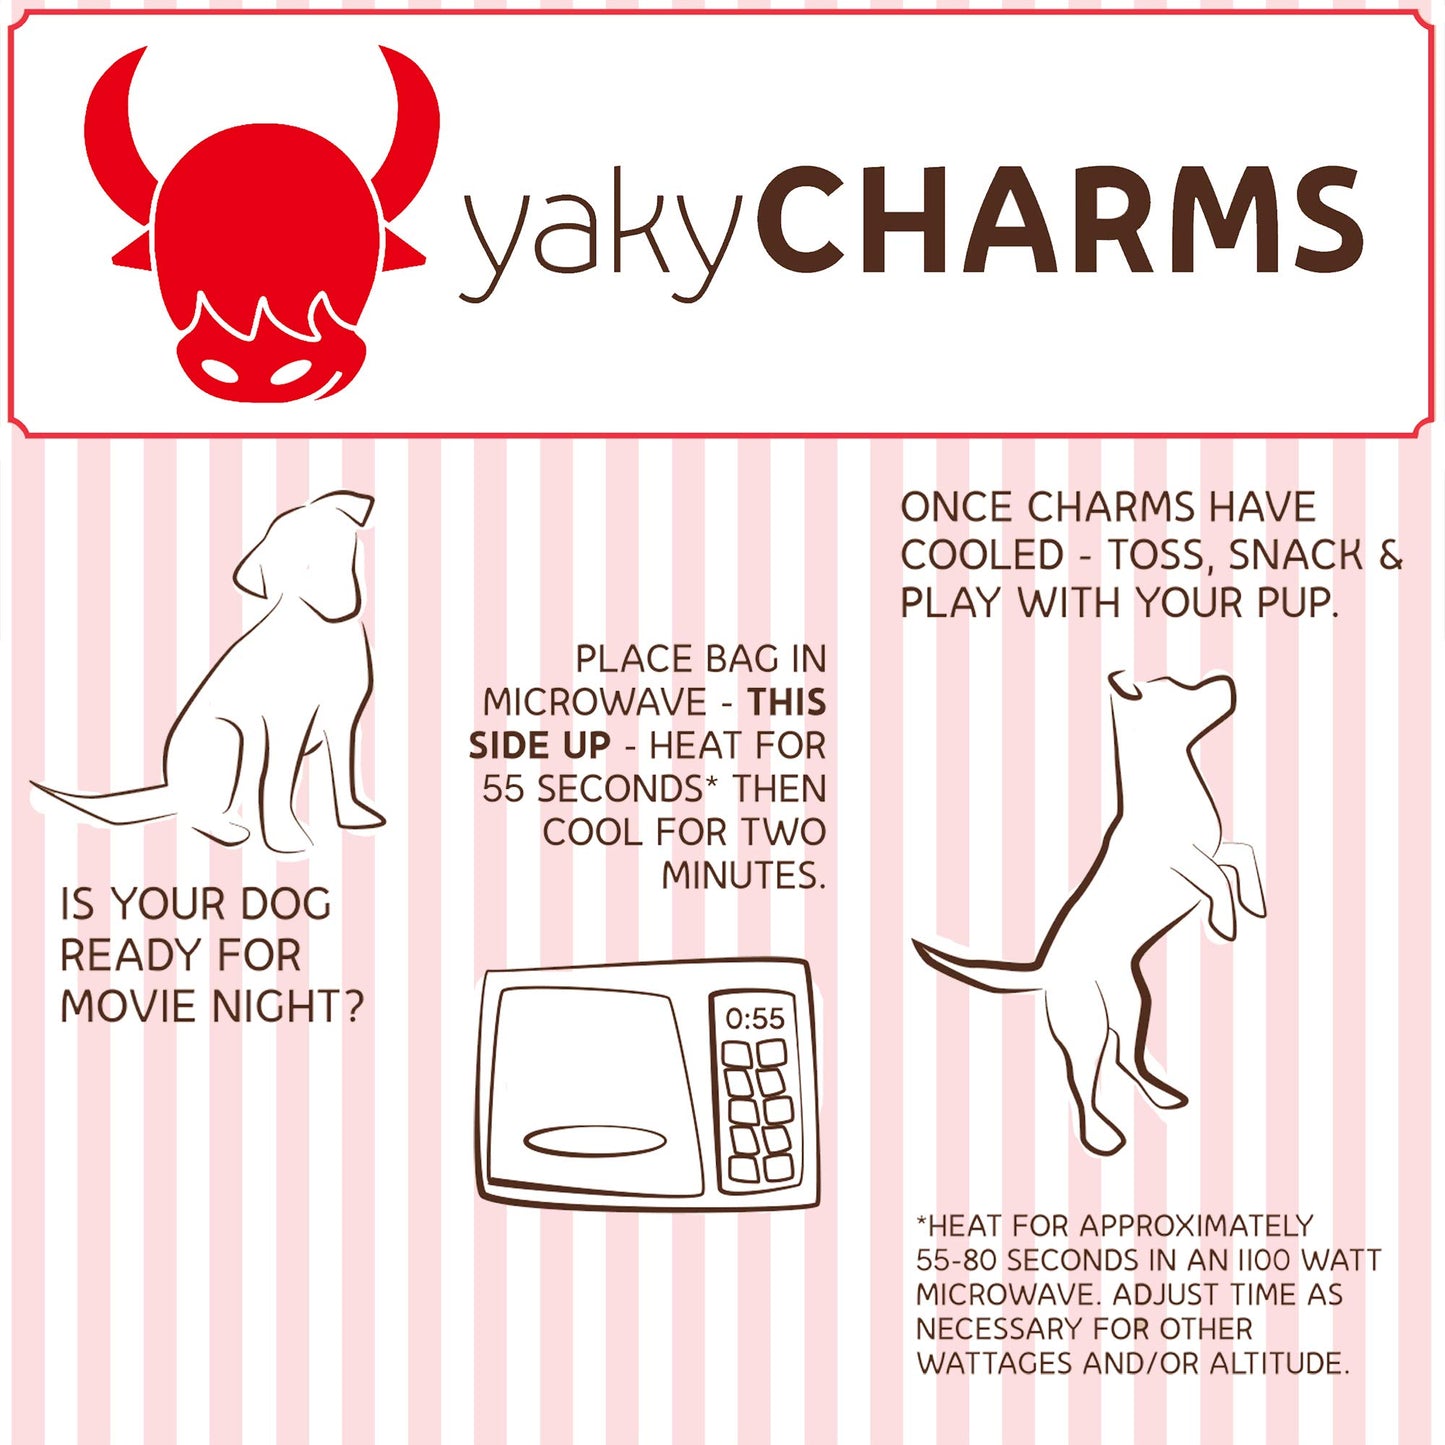 12-Pack Himalayan Yaky Charms Dog Treat Dog Popcorn Made in USA